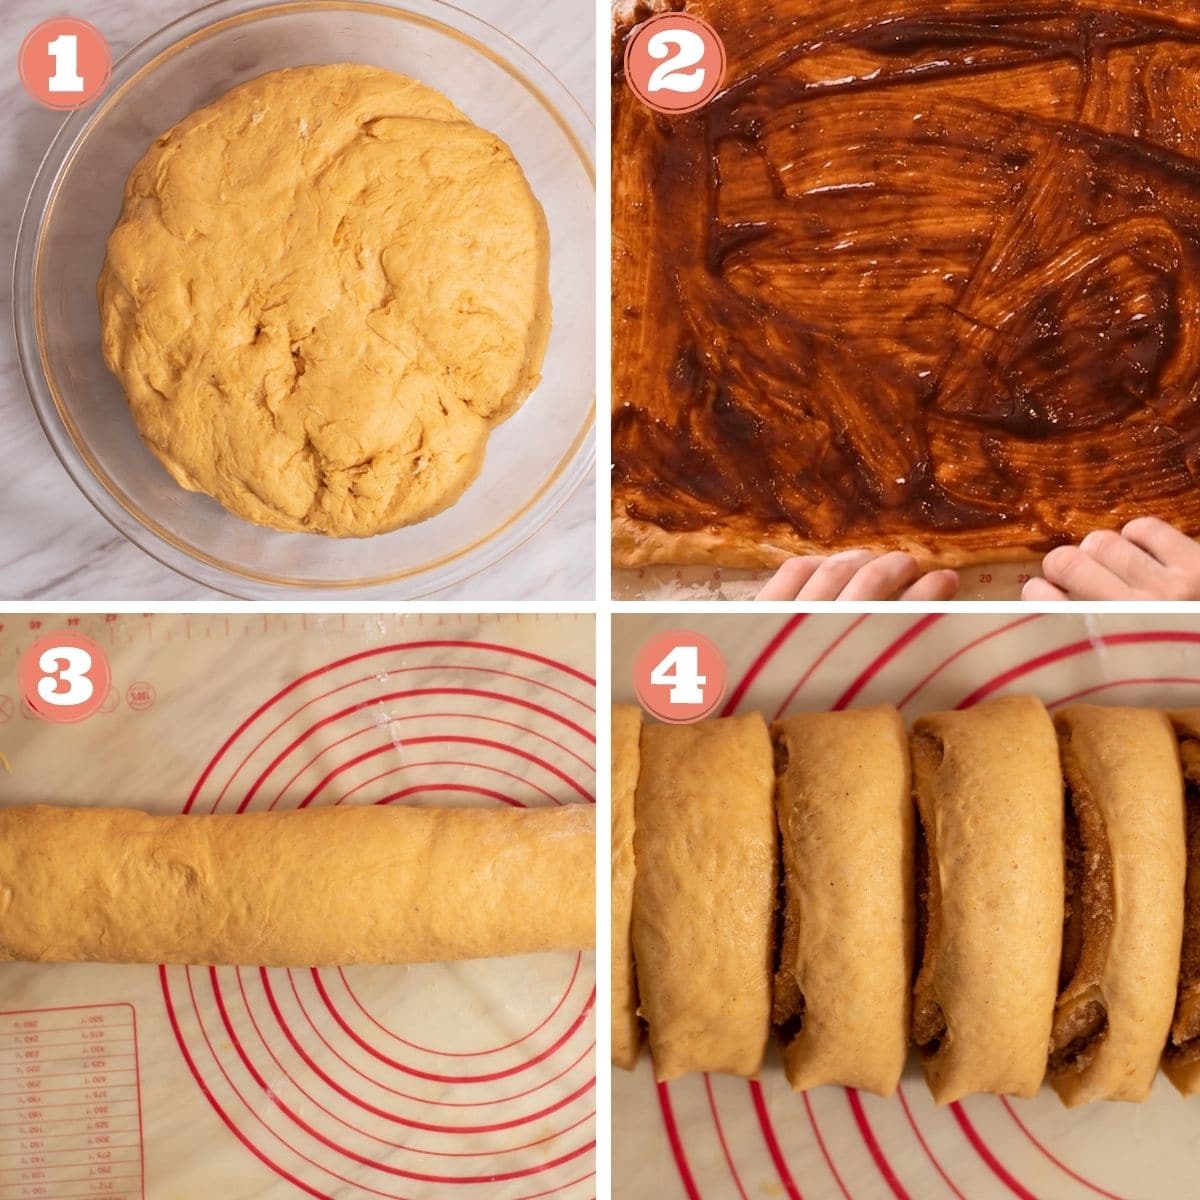 Steps 1 through 4 to prepare and slice cinnamon rolls.